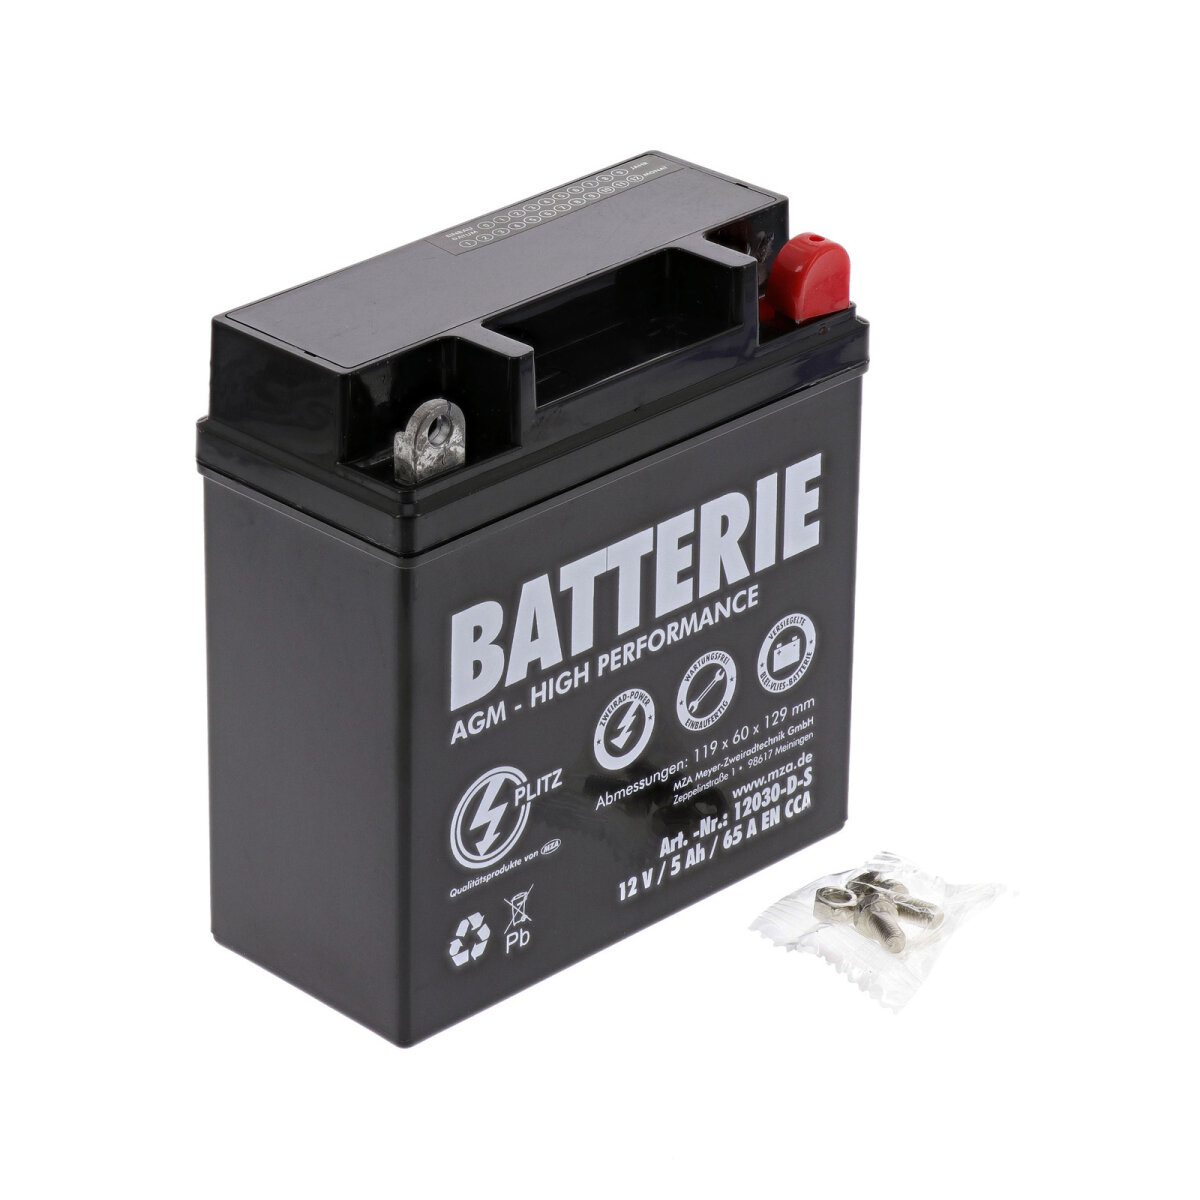 AGM-Batterie 12 V 5 Ah passend für S51, S50, SR50 - LangTuning - Fein